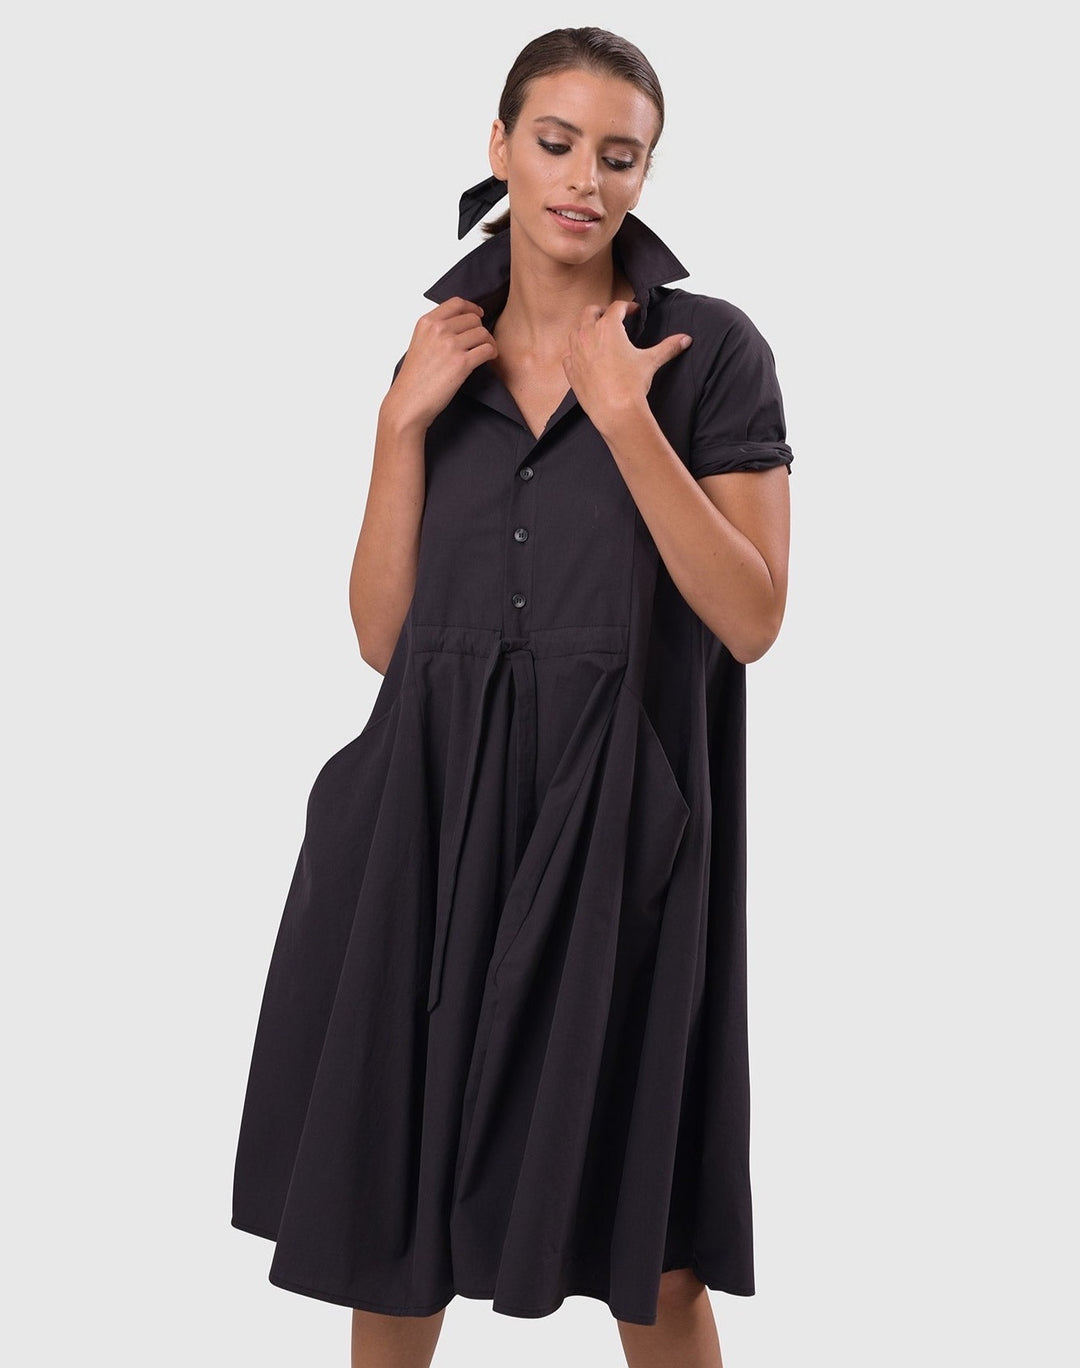 Urban Cooler Dress, Black